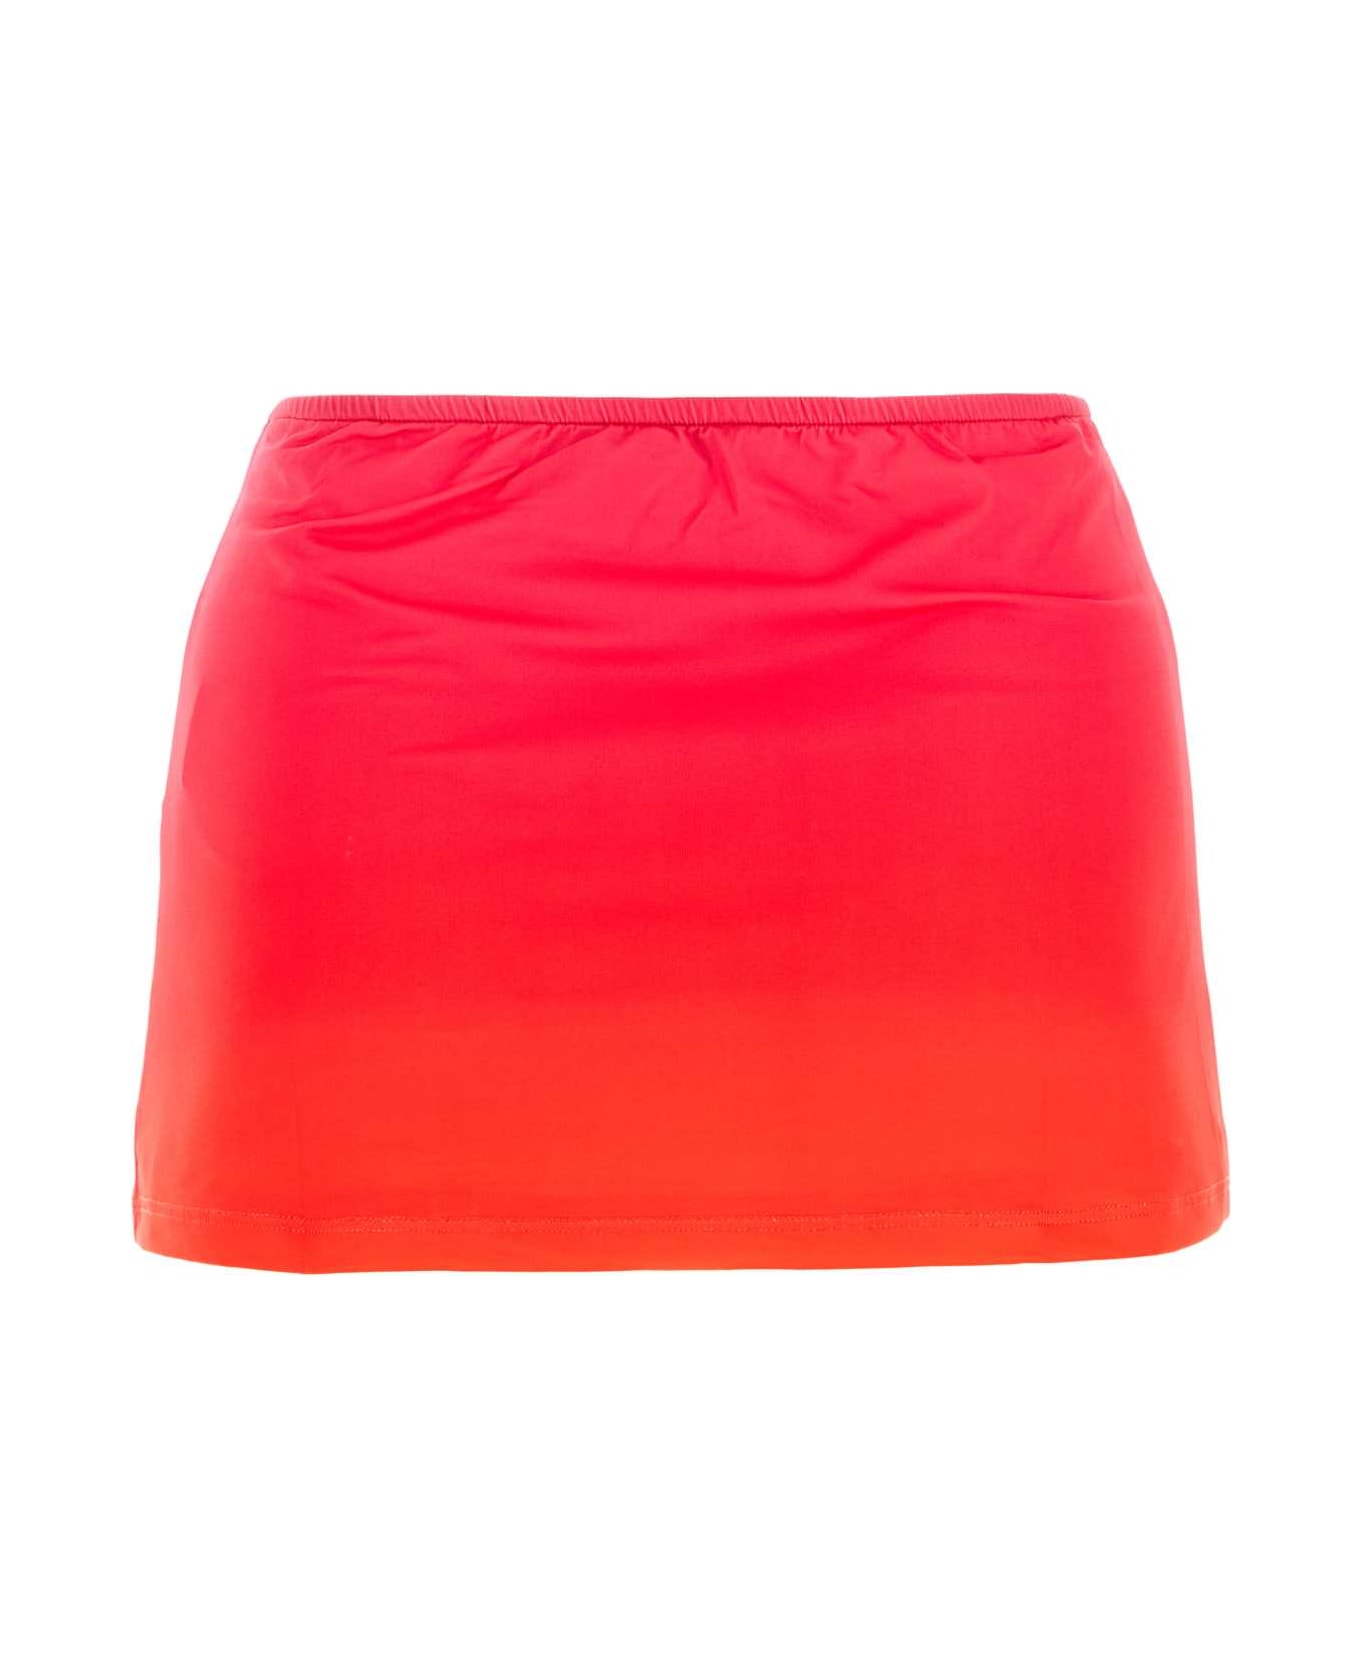 Gimaguas Two-tone Polyester Alba Miniskirt - PINK